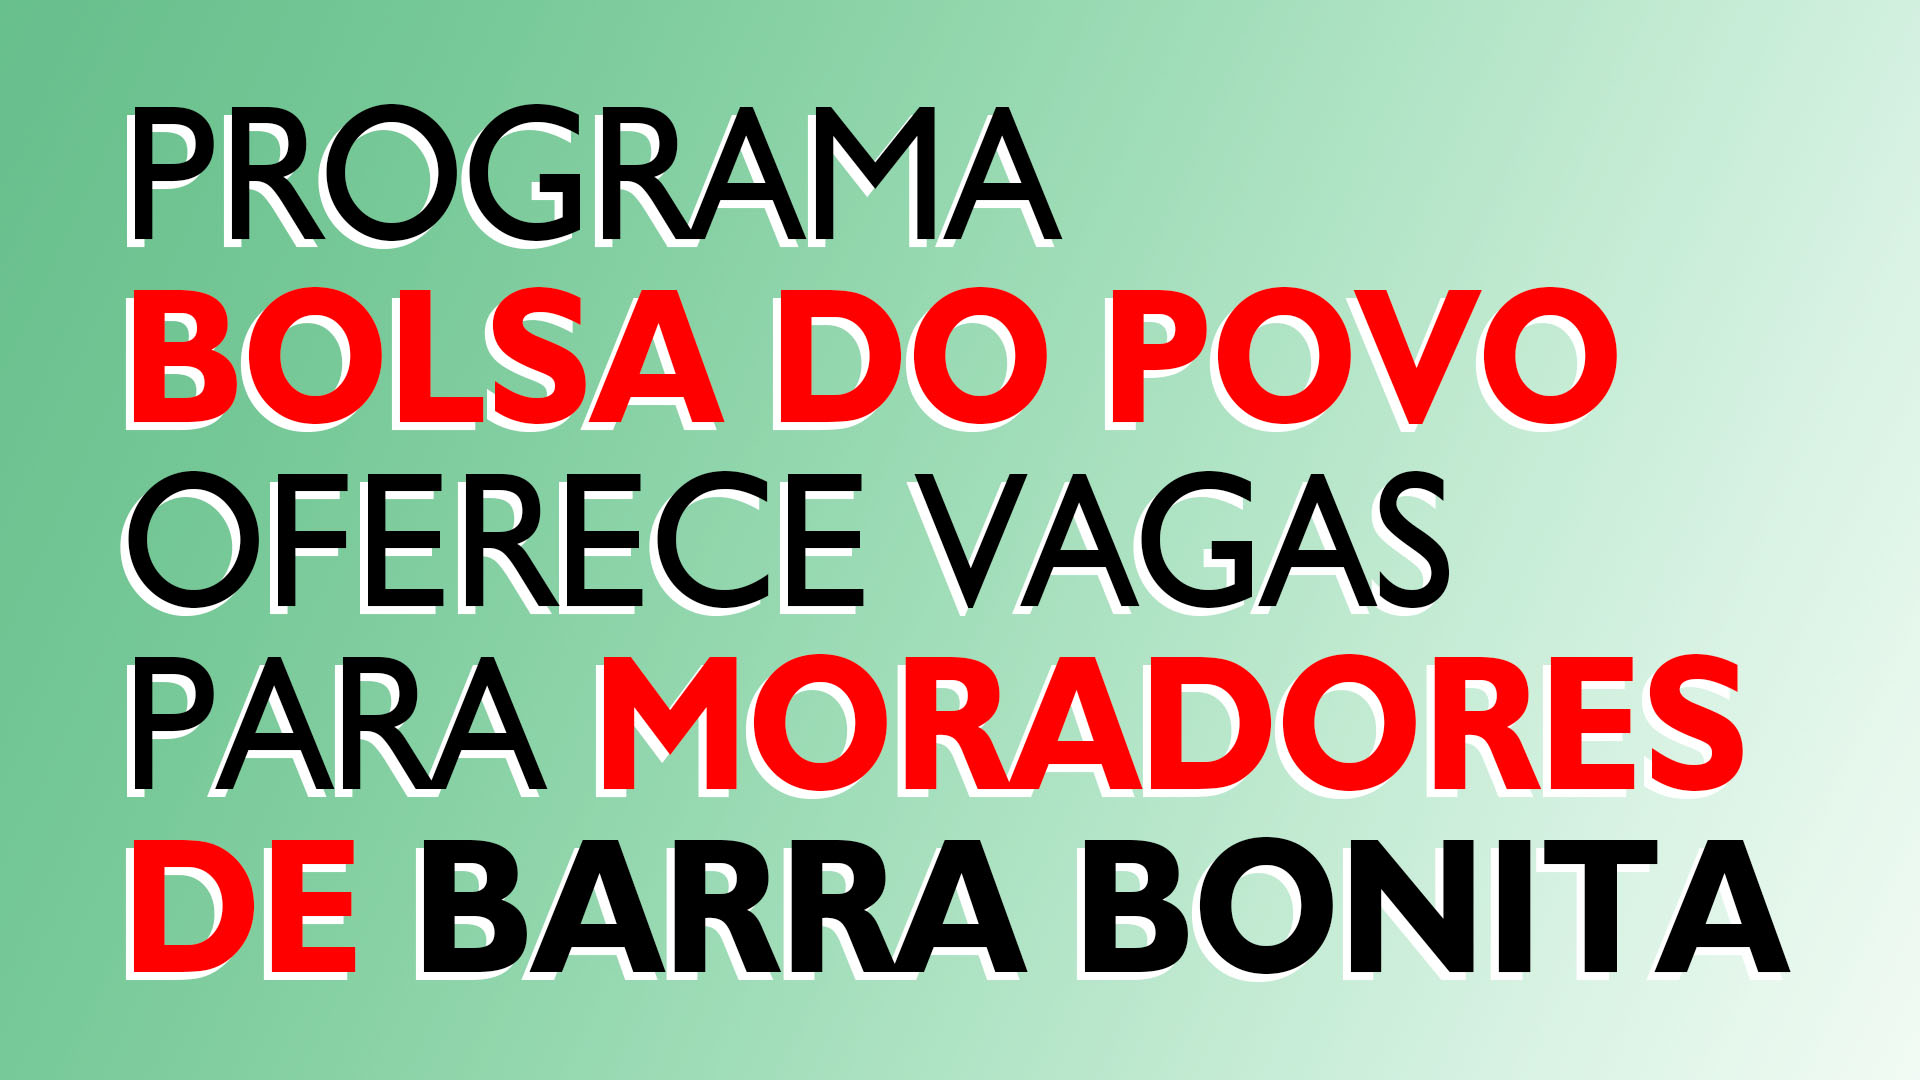 PROGRAMA BOLSA DO POVO OFERECE VAGAS PARA MORADORES DE BARRA BONITA